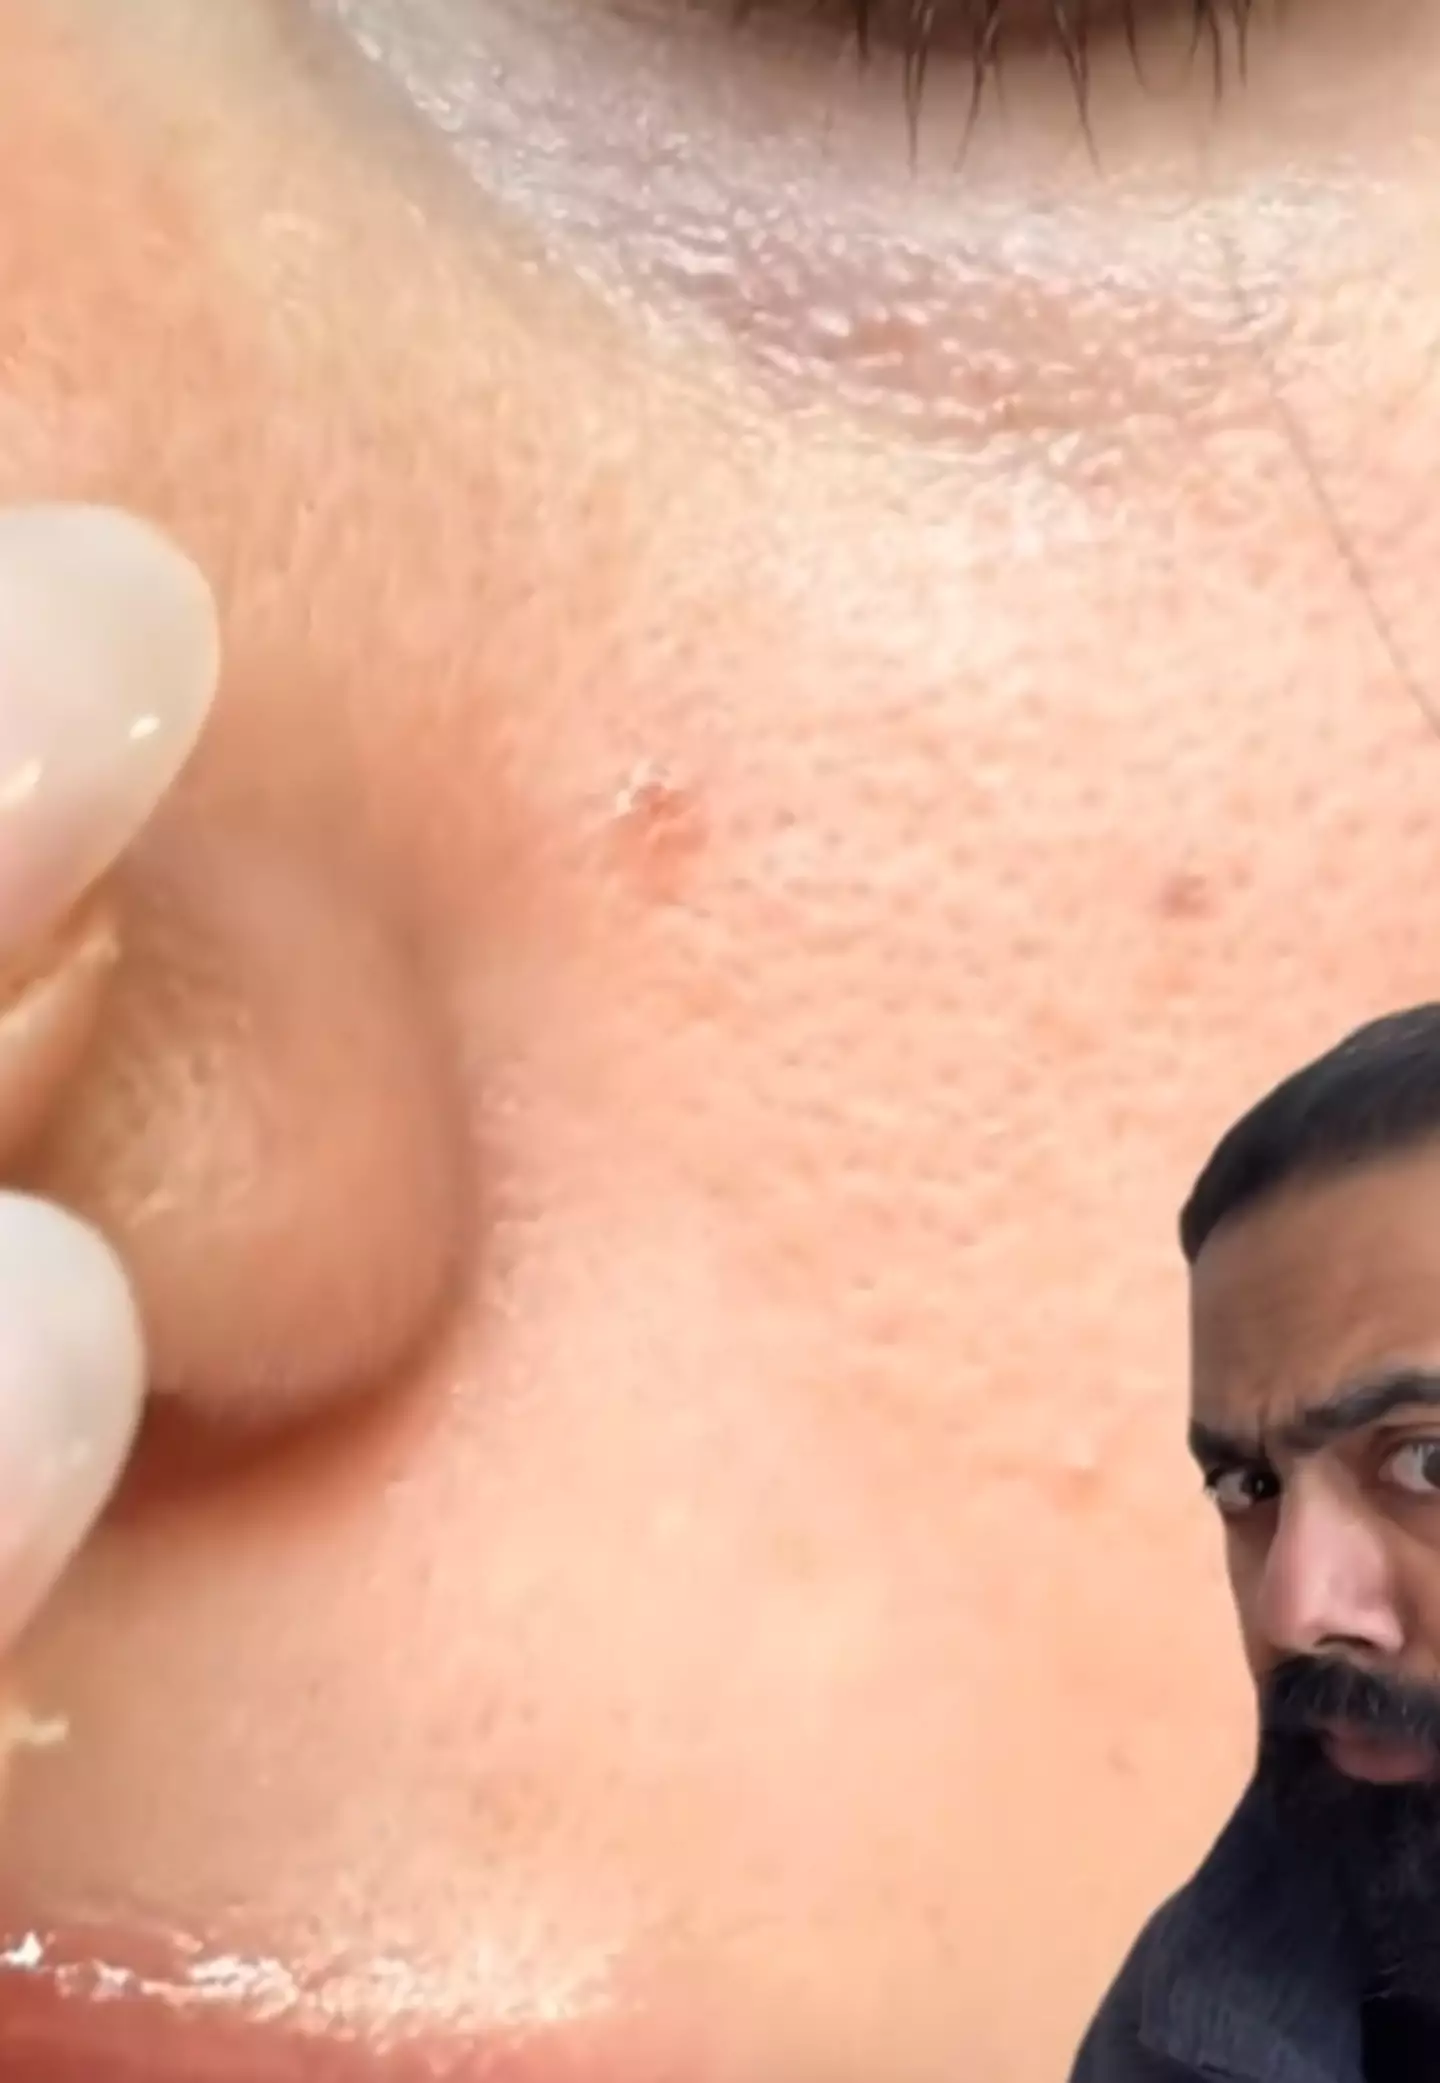 Dr Karan Rajan explained what skin cancer could look like. Instagram/ @drkaranrajan